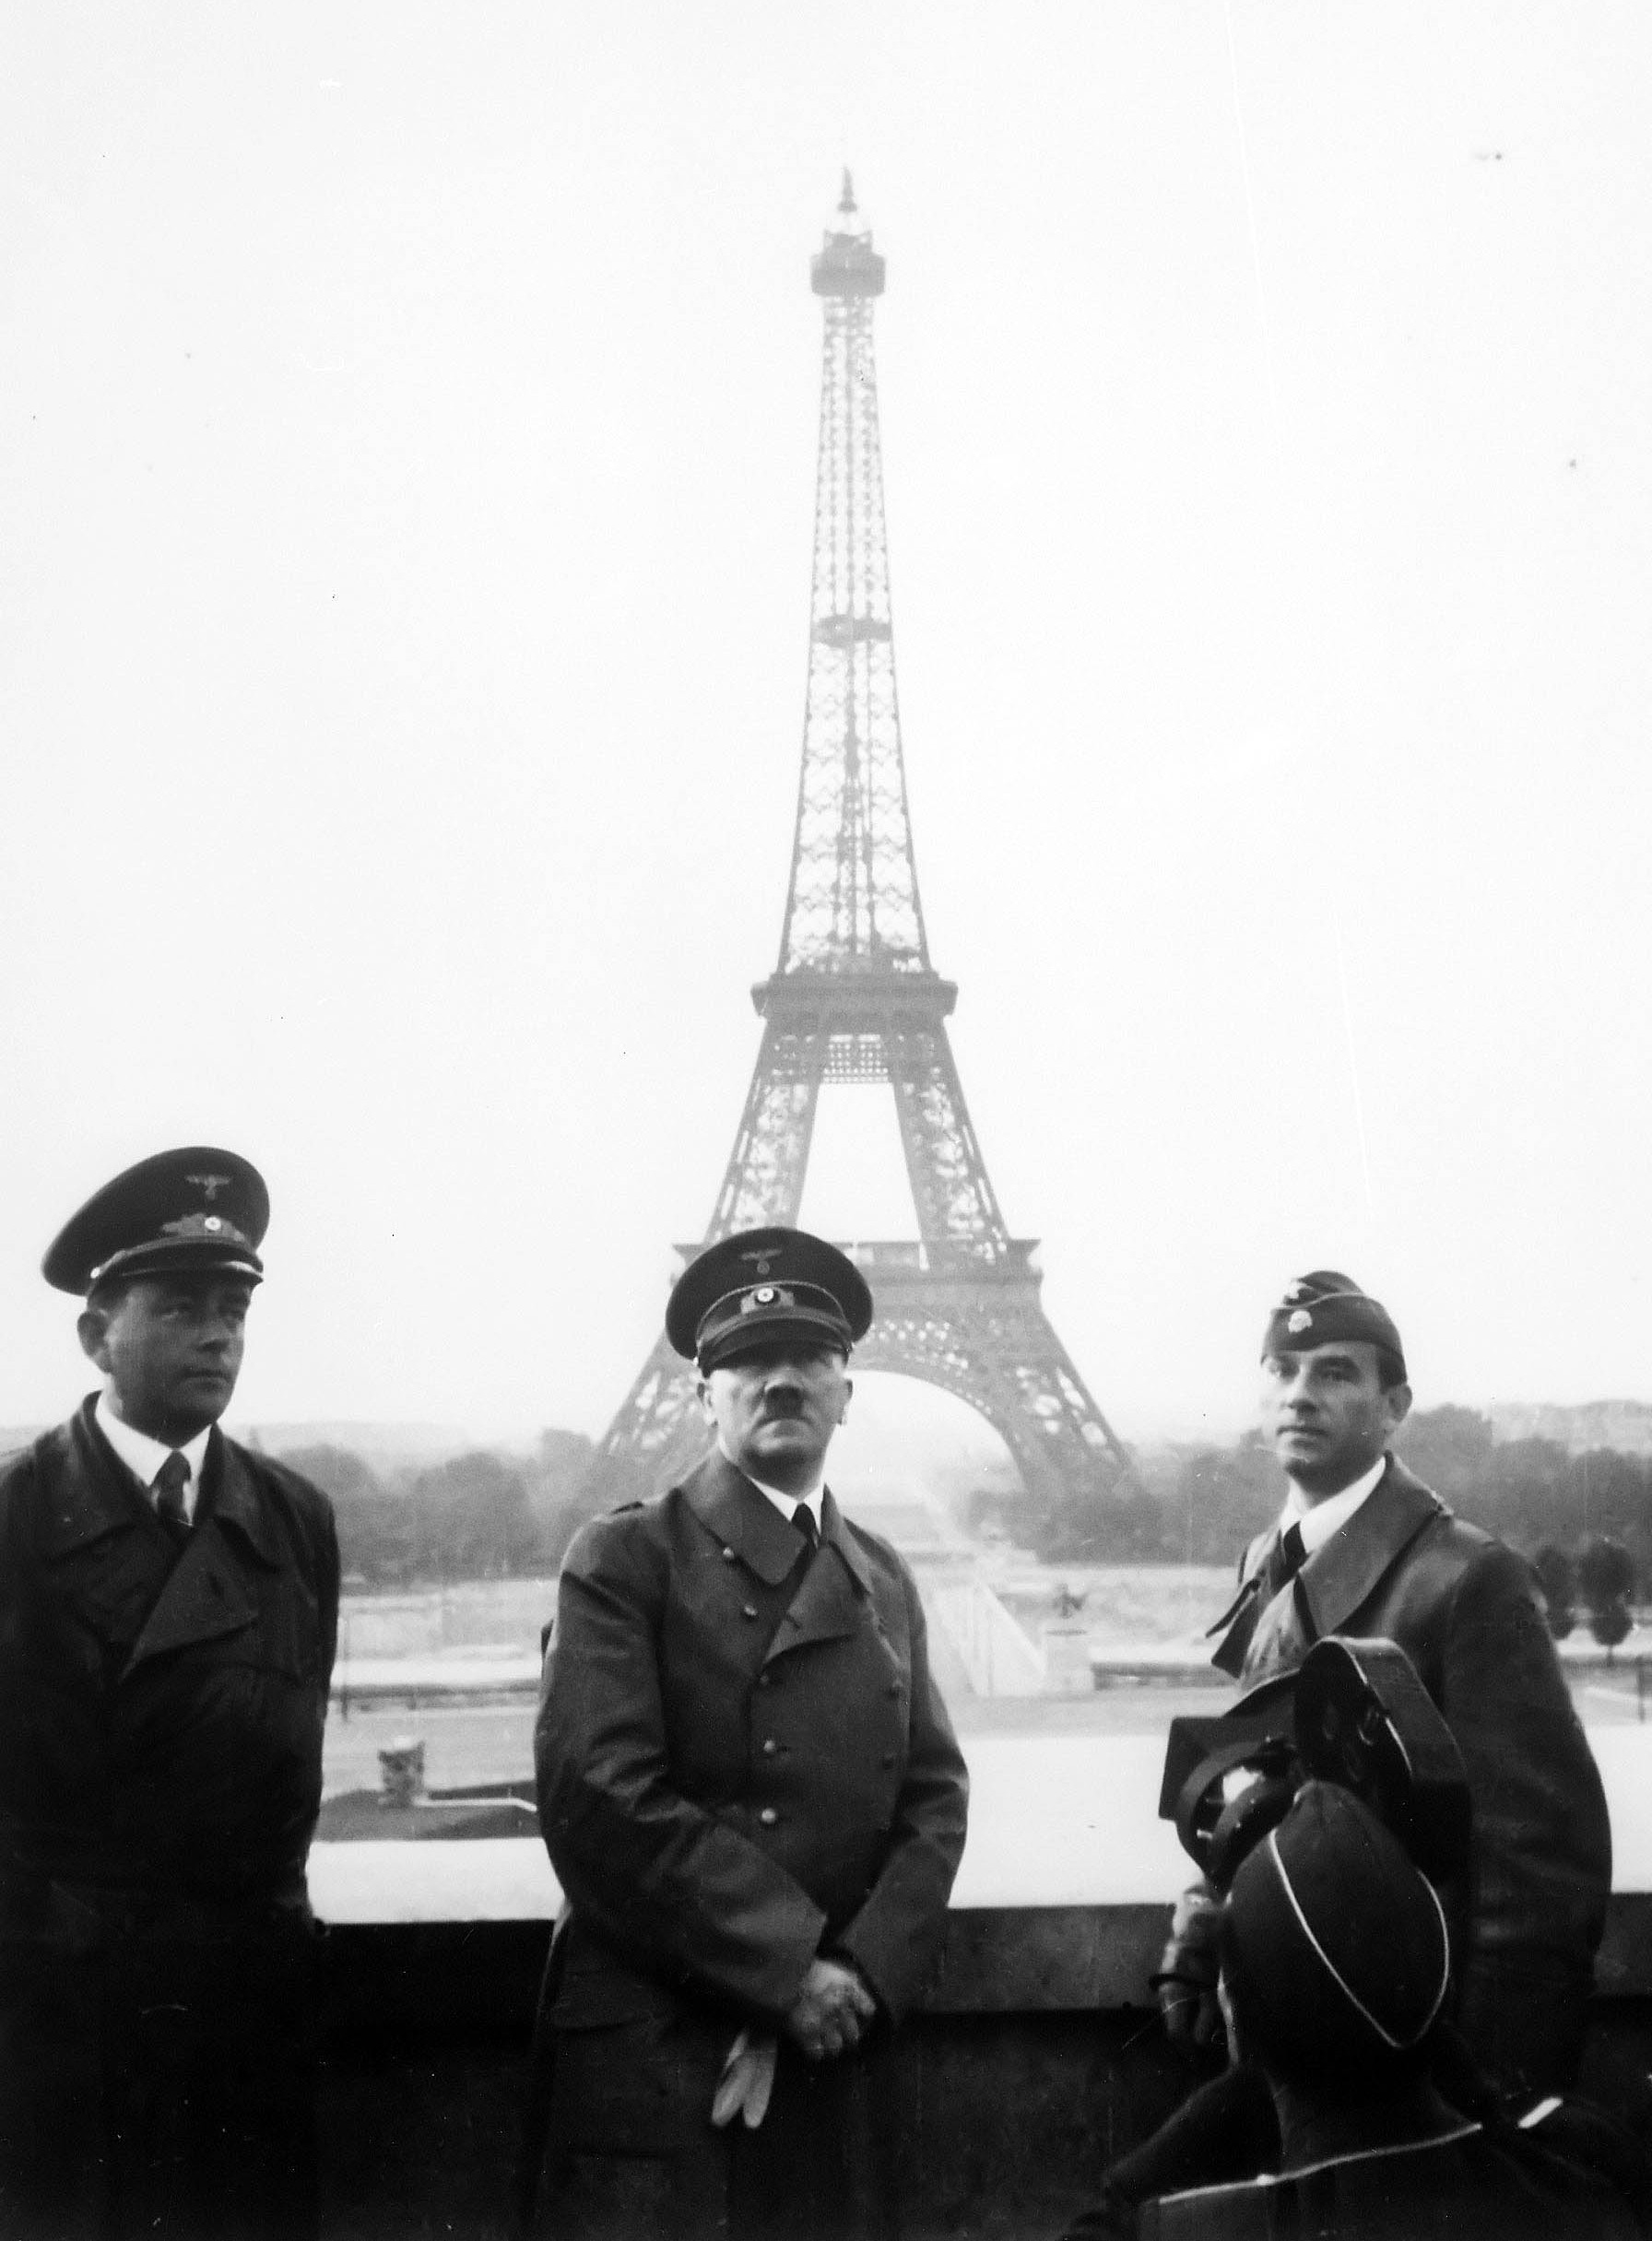 People 1792x2431 France Eiffel Tower World War II Paris Adolf Hitler history Nazi National Socialism dictators portrait display monochrome landmark